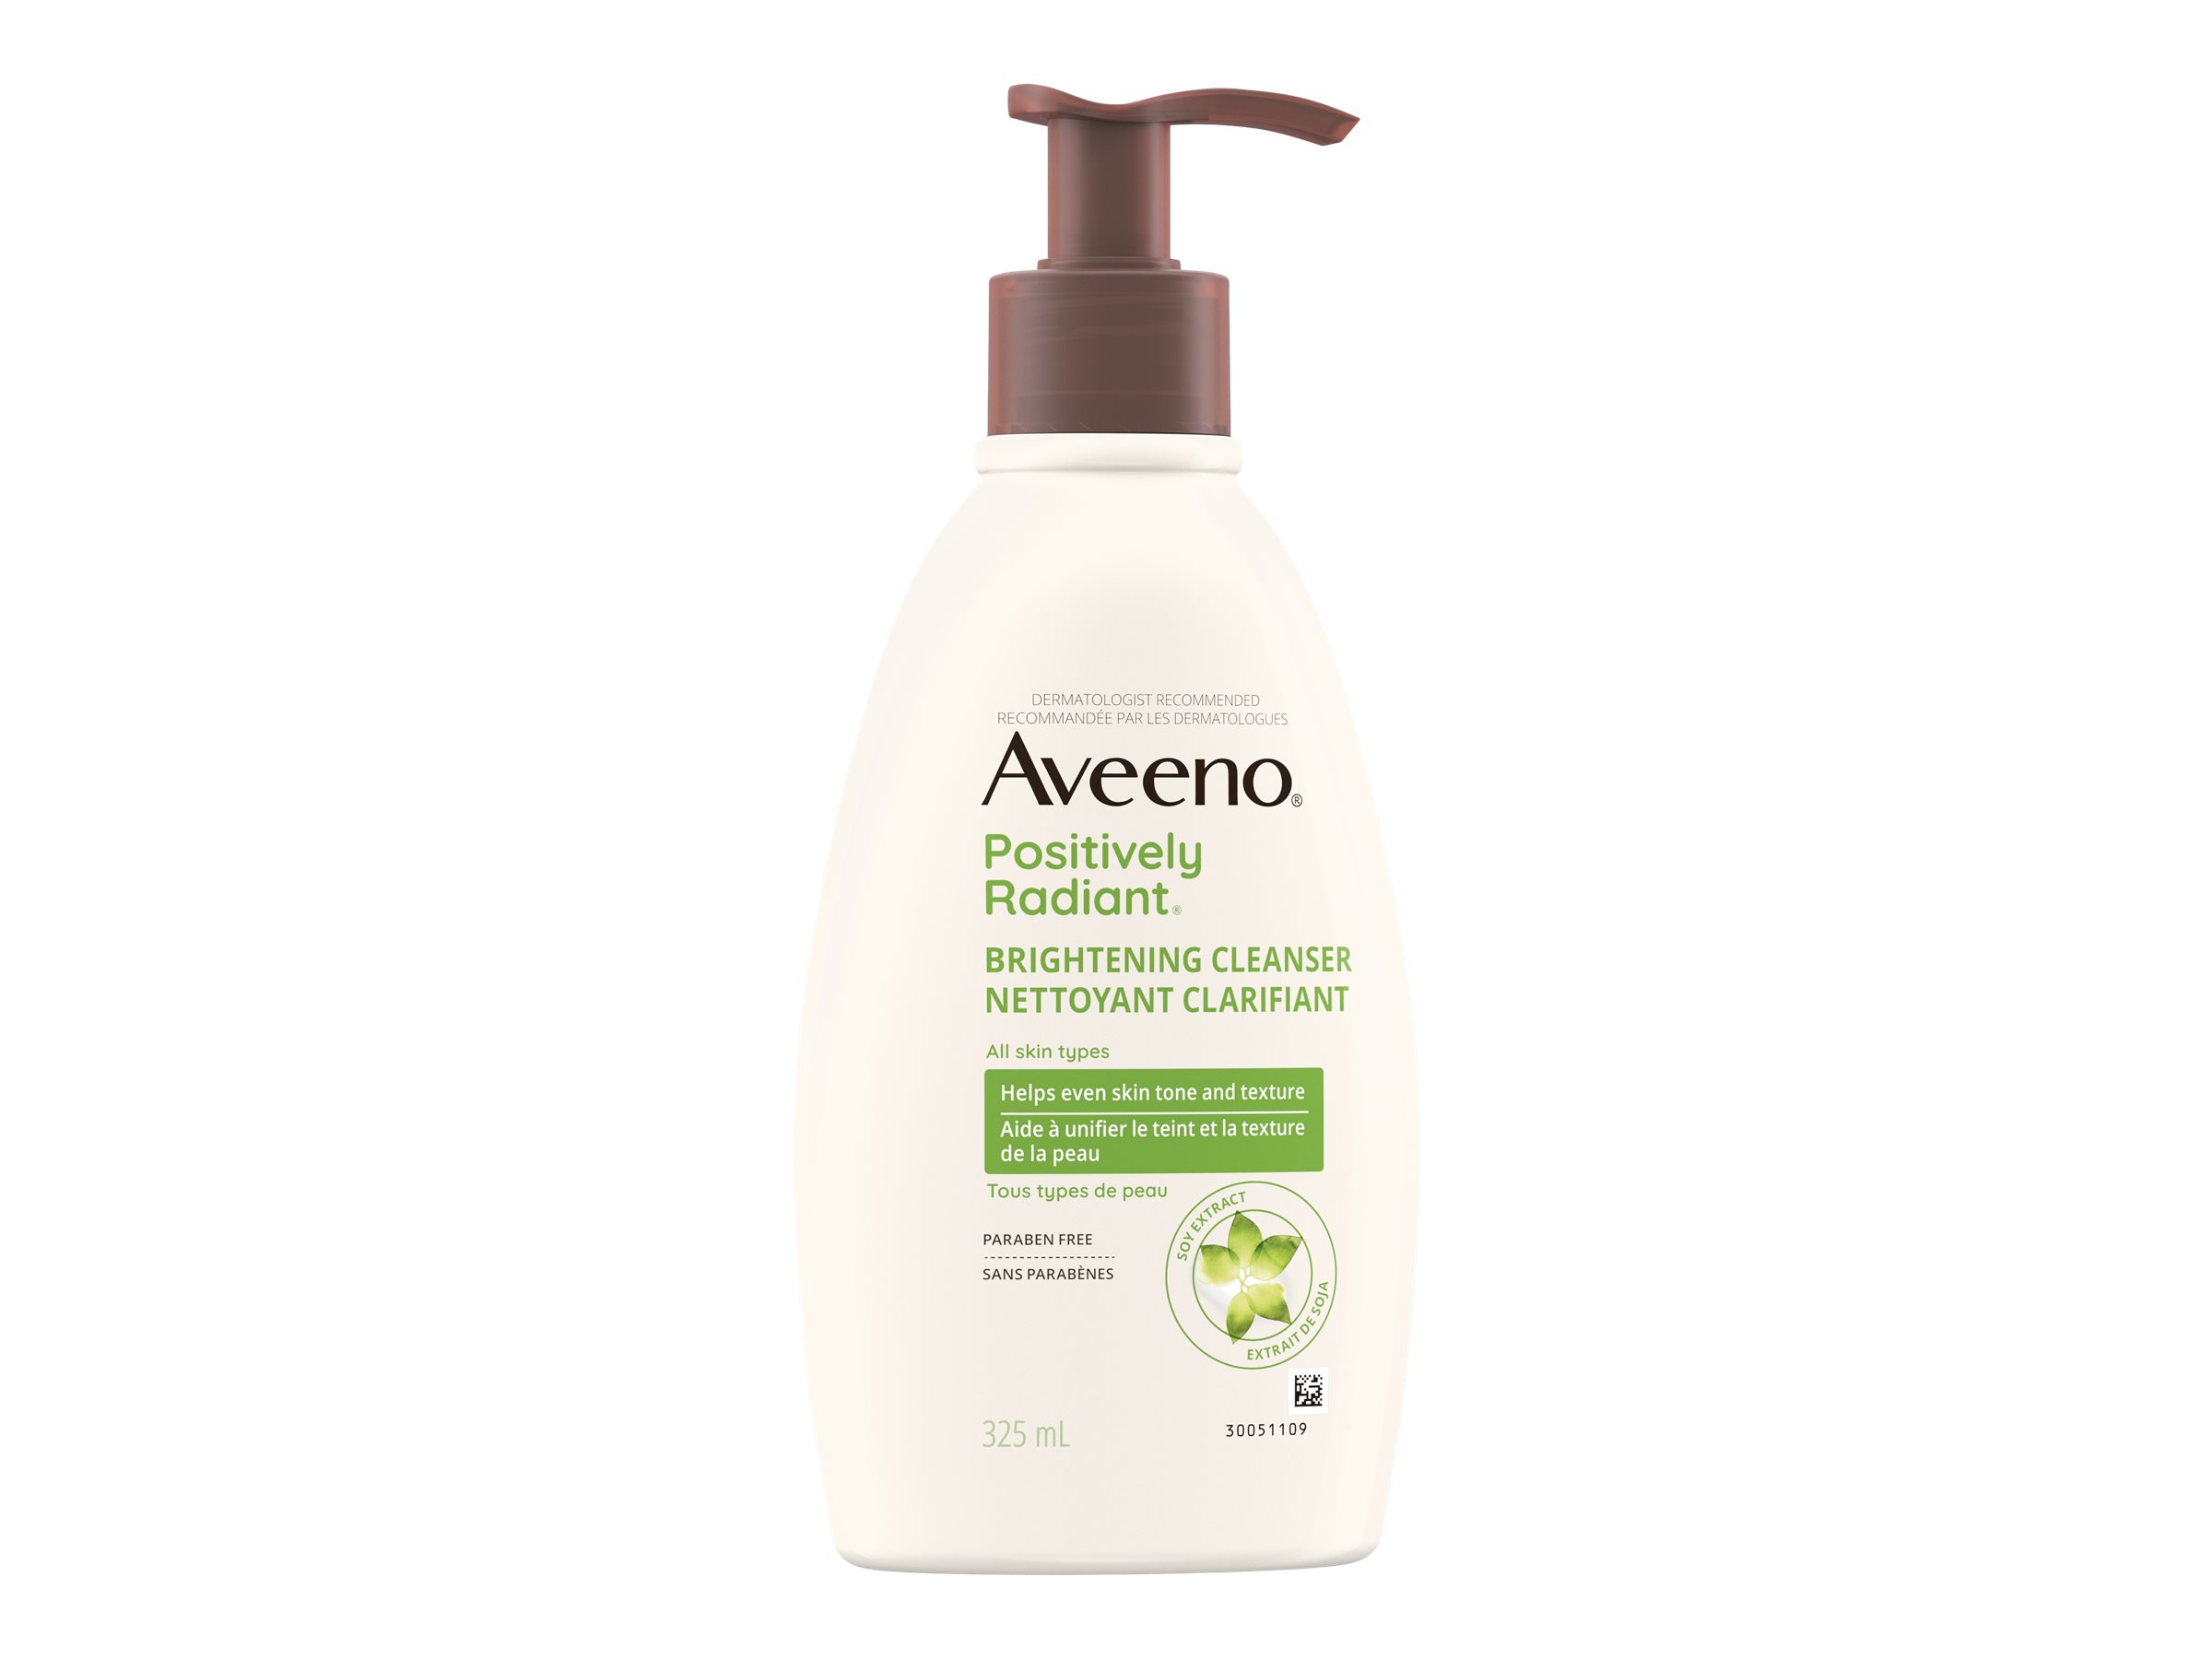 Aveeno Positively Radiant Brightening Cleanser - 325ml